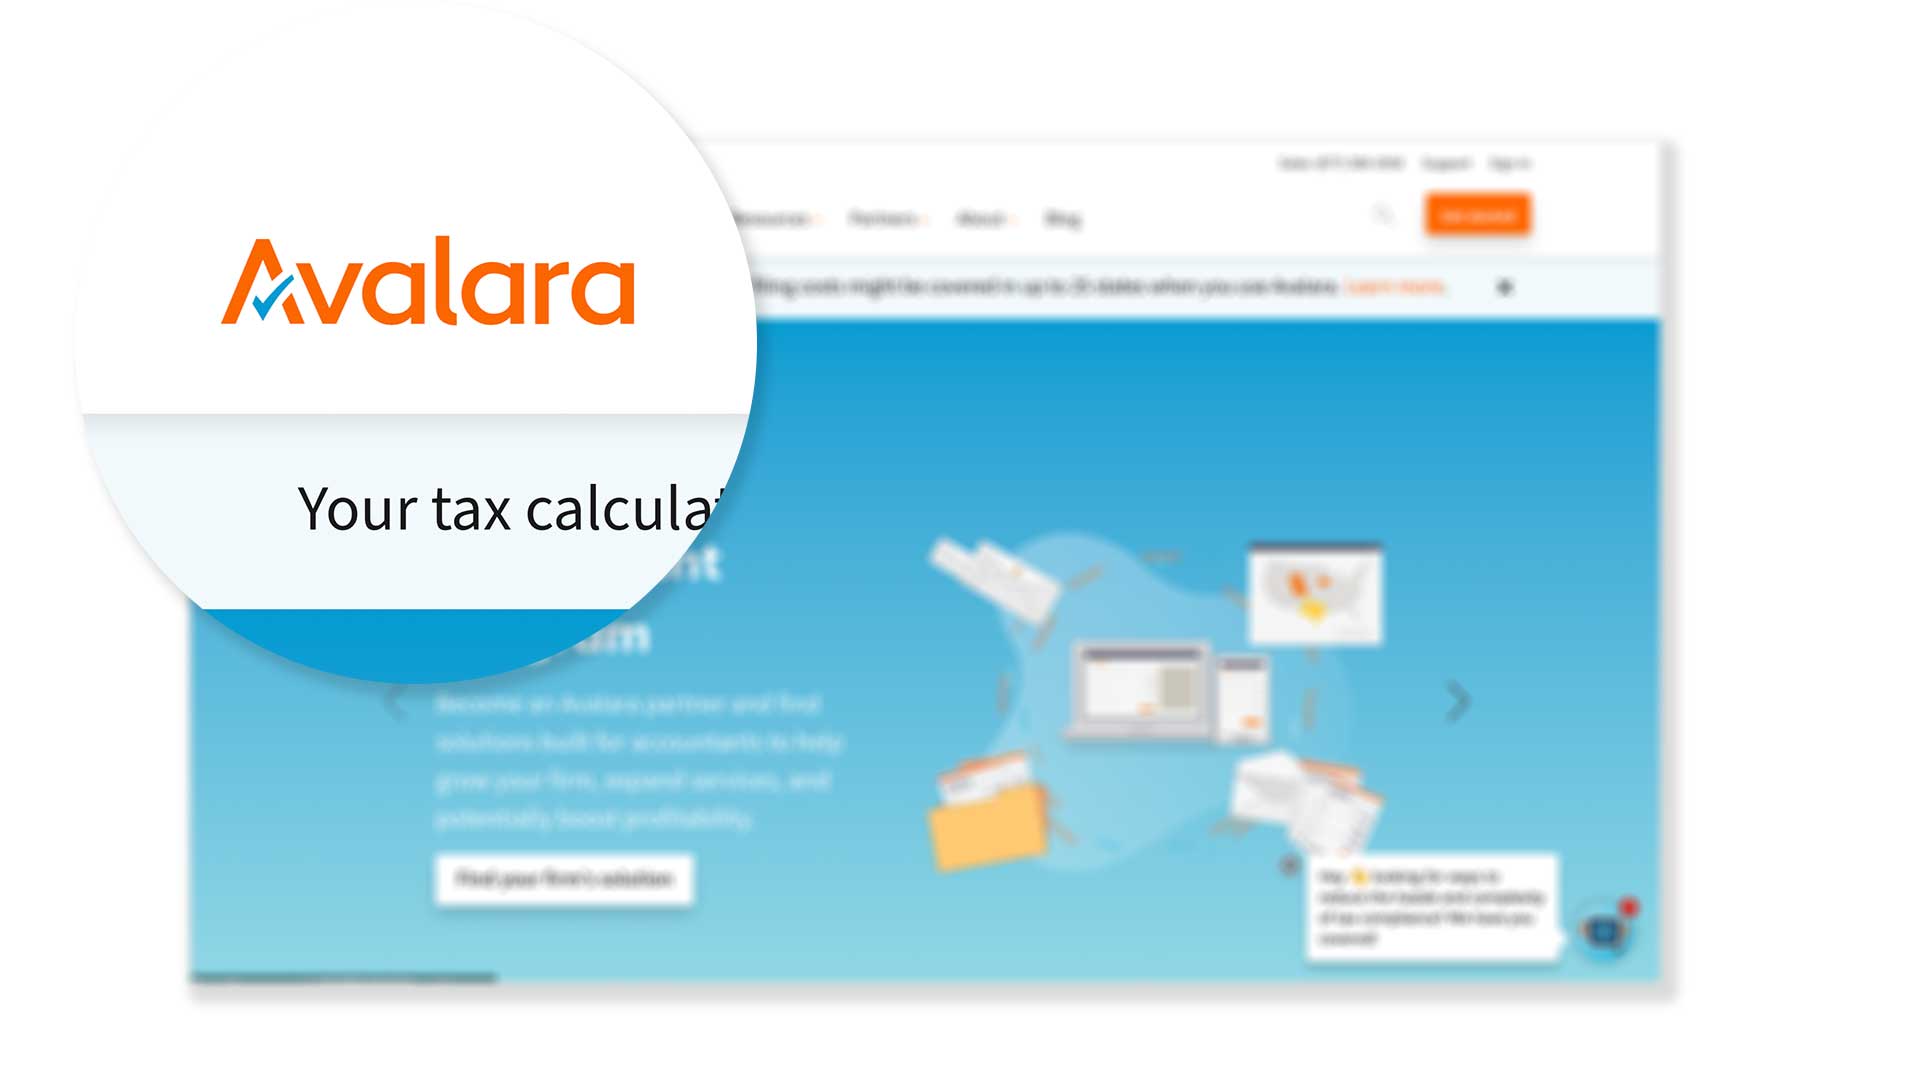 Digitisation of Tax reporting global tracker - Avalara